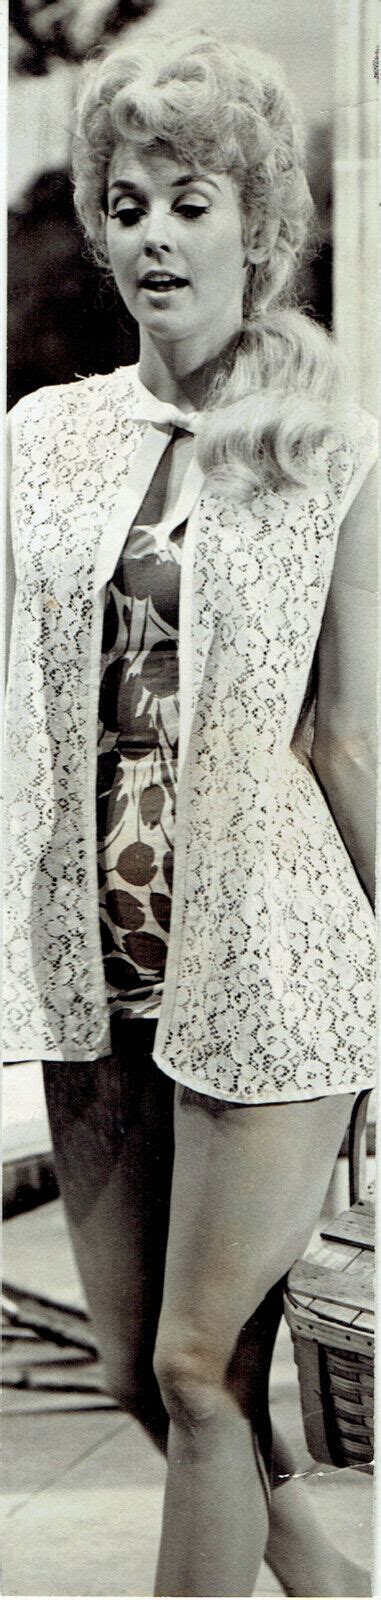 Press Photo Leggy Actress Donna Douglas In Swimsuit Beverly Hillbillies EBay